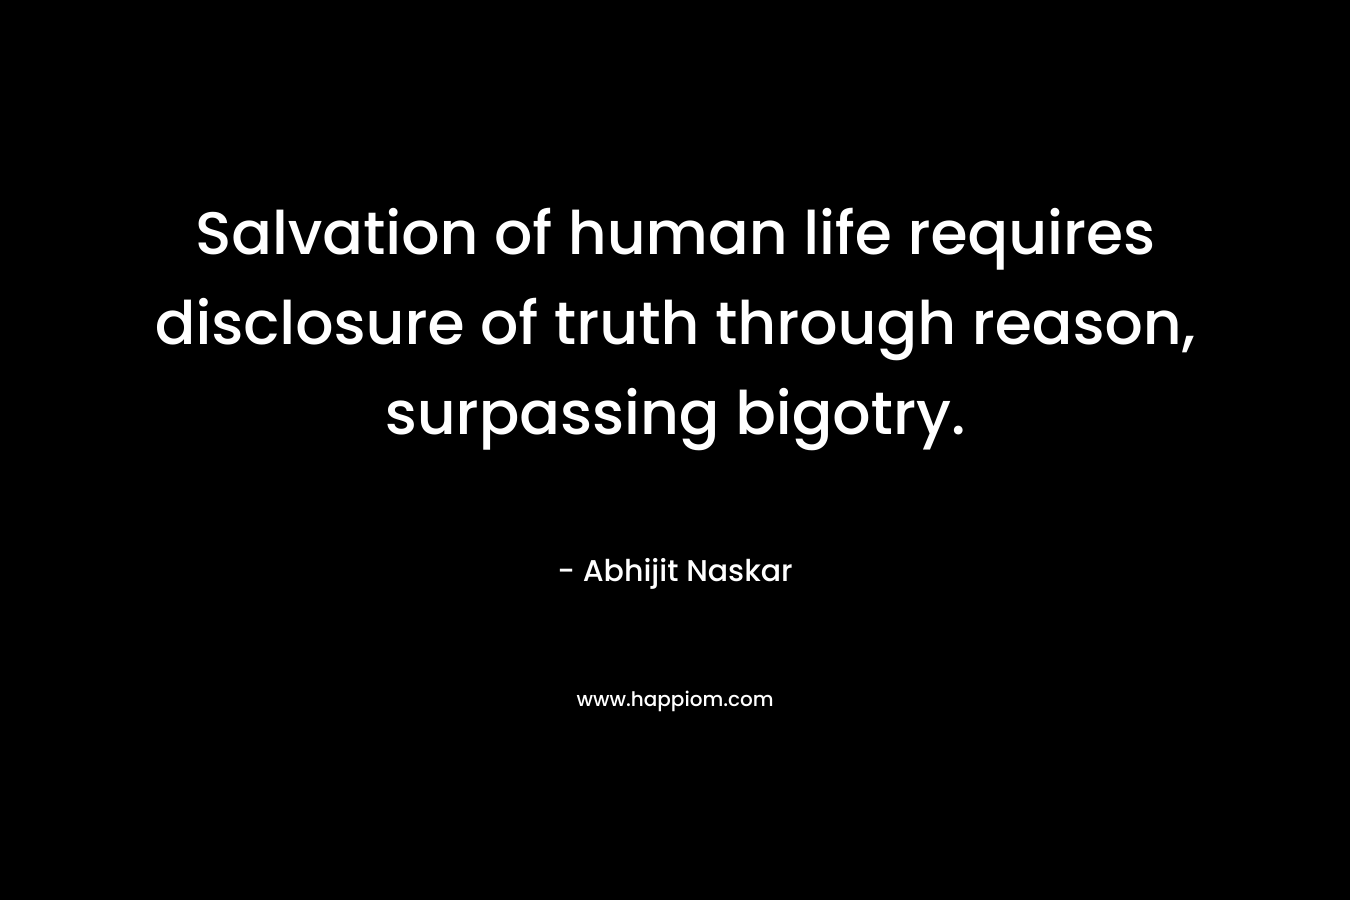 Salvation of human life requires disclosure of truth through reason, surpassing bigotry. – Abhijit Naskar